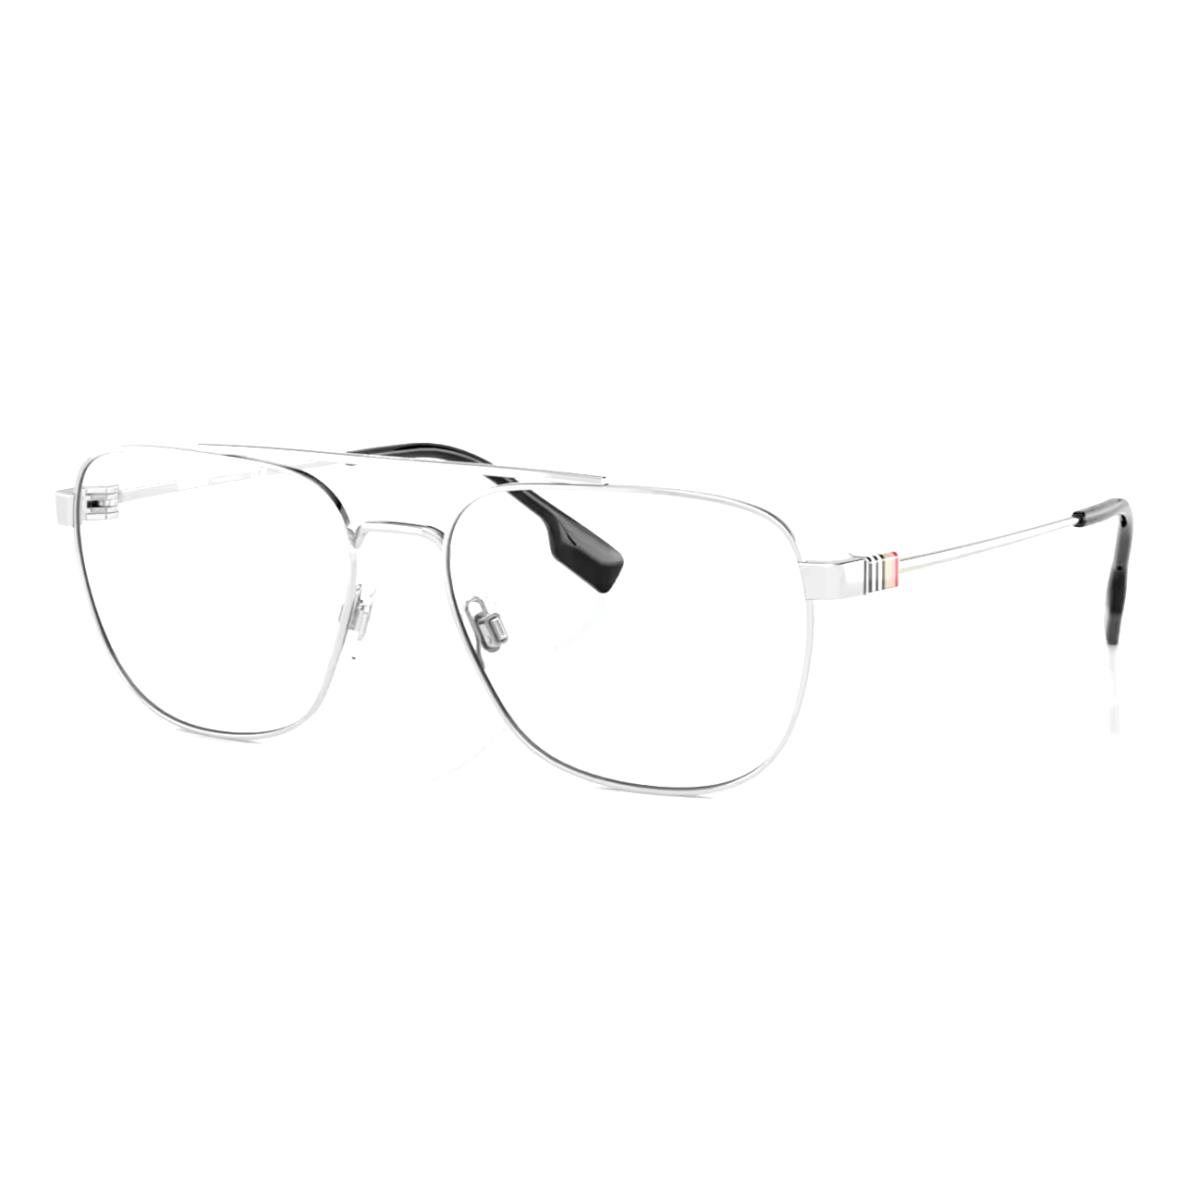 Burberry Michael Eyeglasses B 1377 1005 55-17 145 Silver Aviator Frames